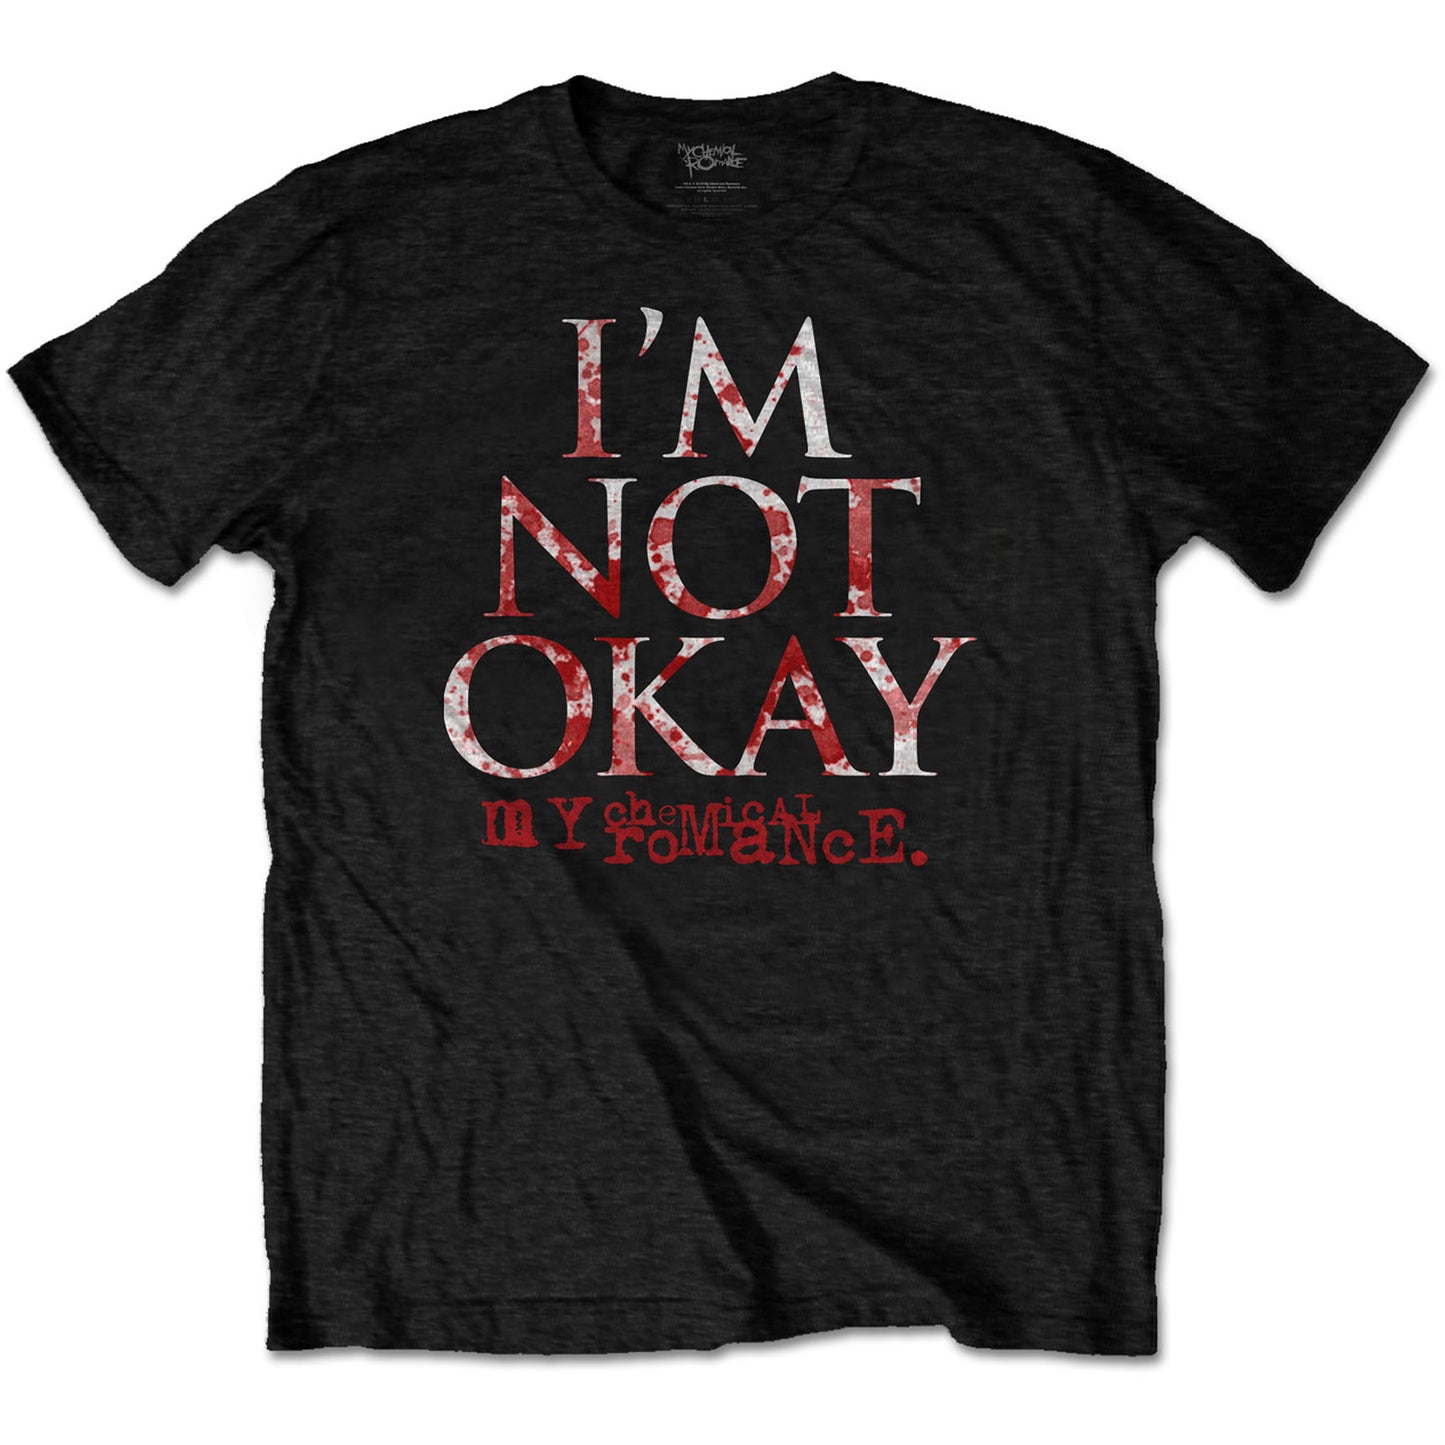 My Chemical Romance T-Shirt: I'm Not Okay